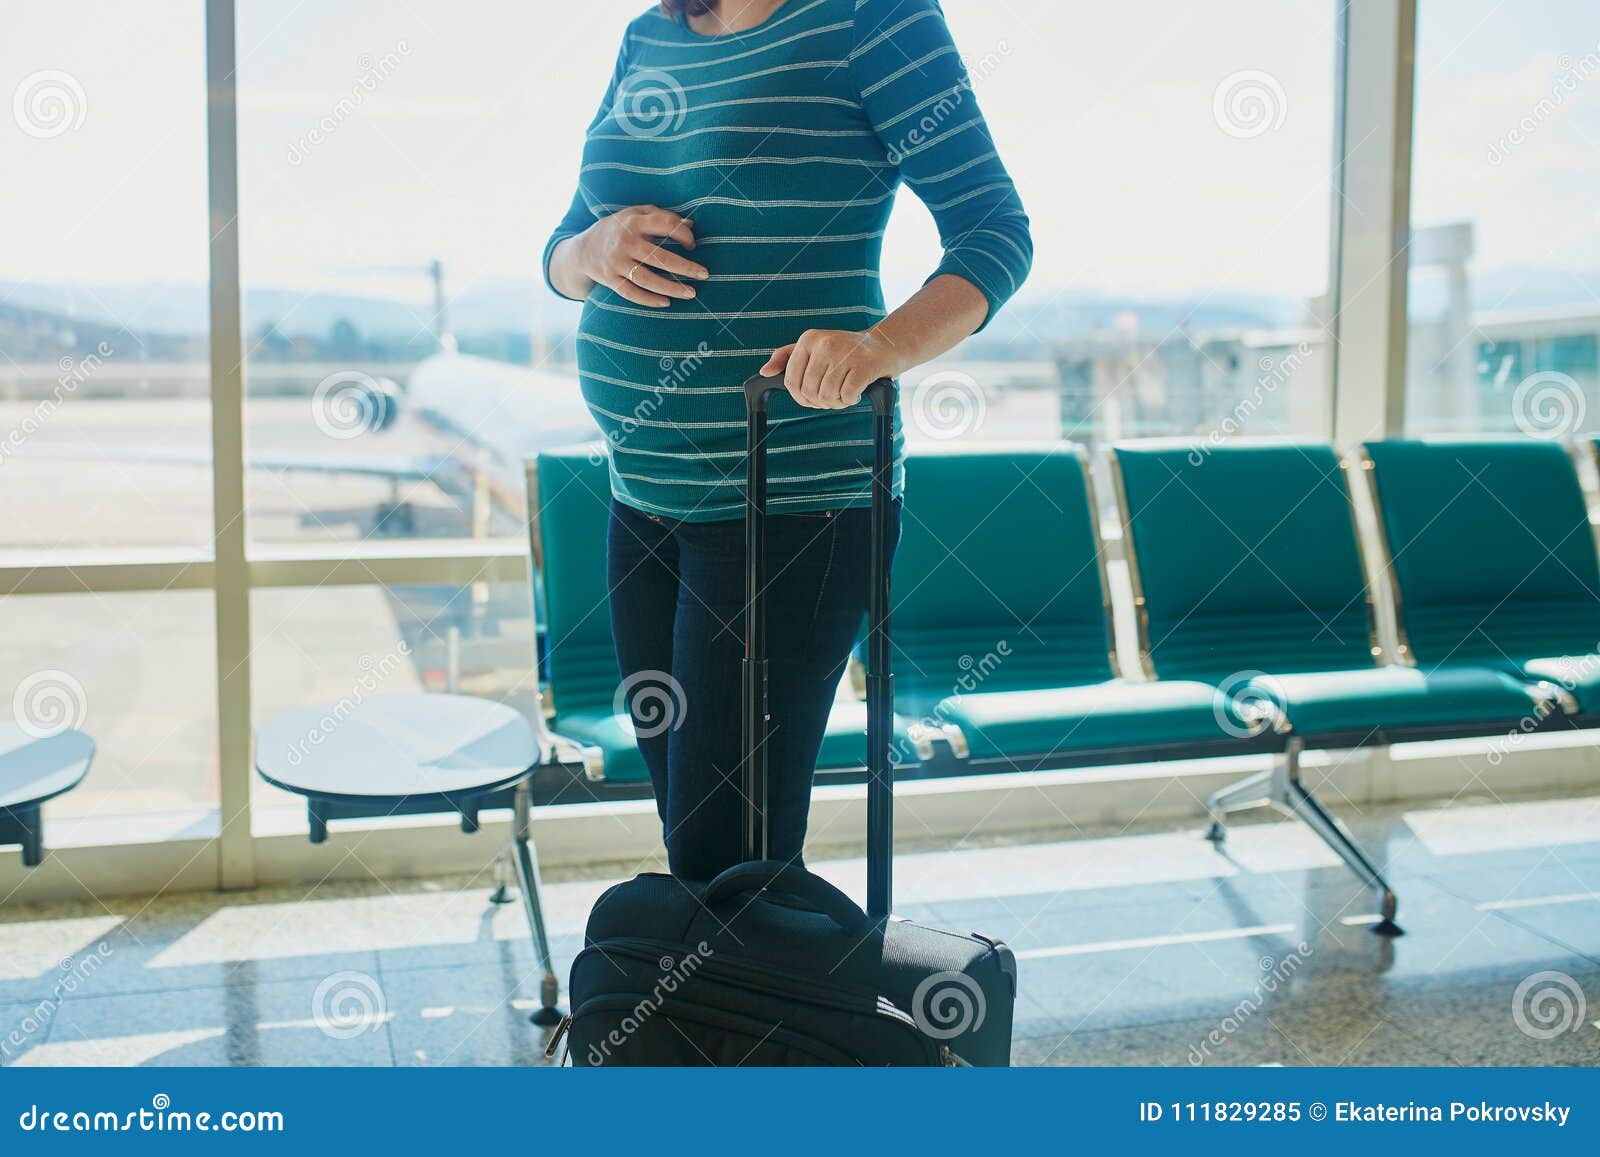 voyage en avion femme enceinte air france